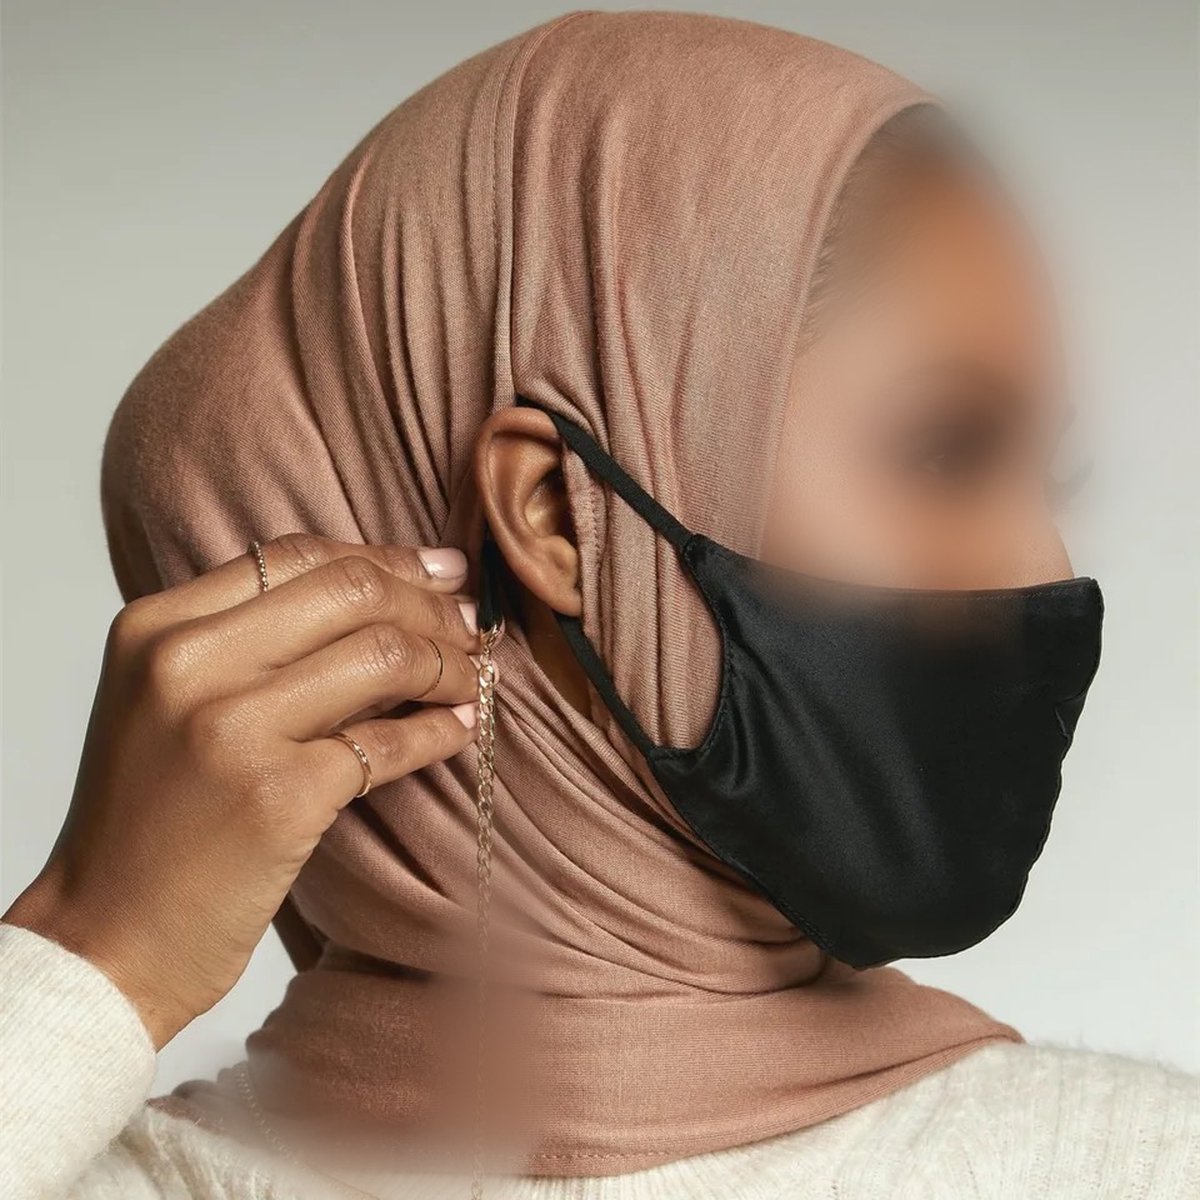 Hoofddoek Hijab met oor gat travel reis comfort hoofddoek Masker Hoofdtelefoon Wit